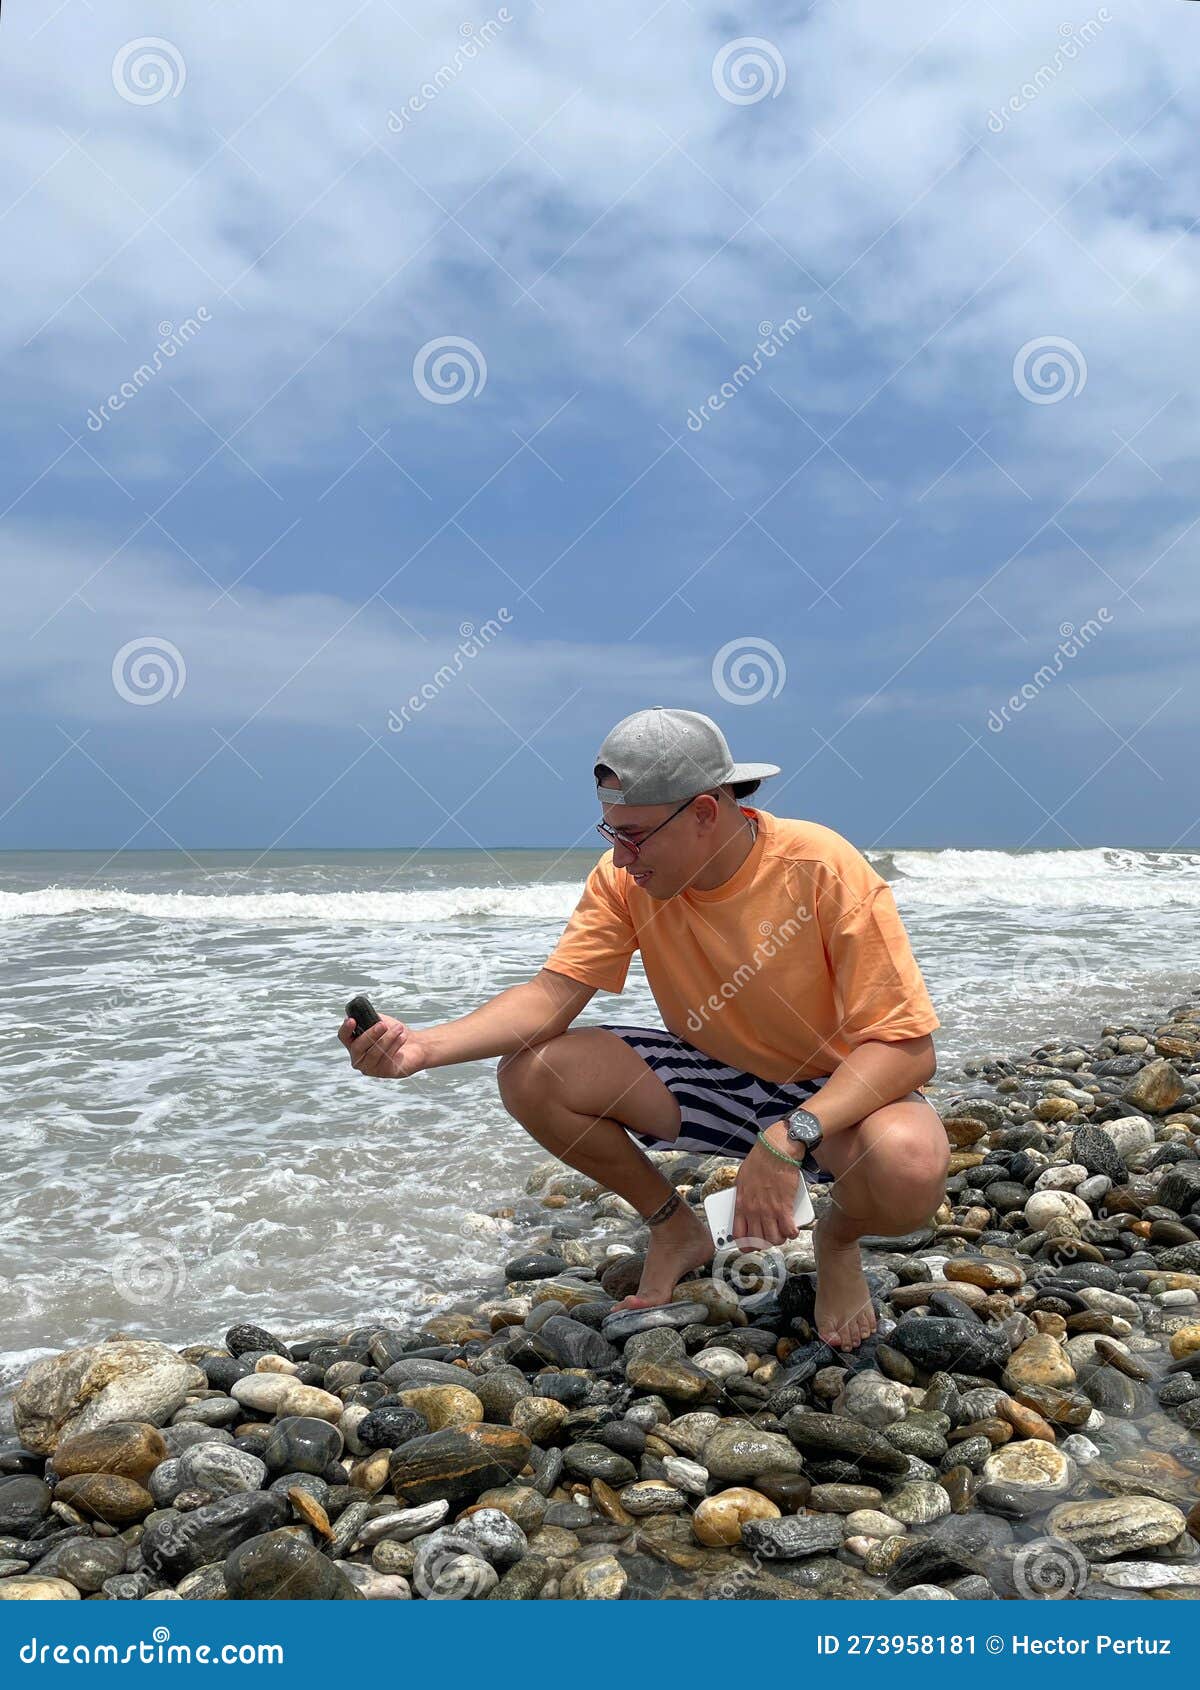 man enjoying the sea on a sunny day